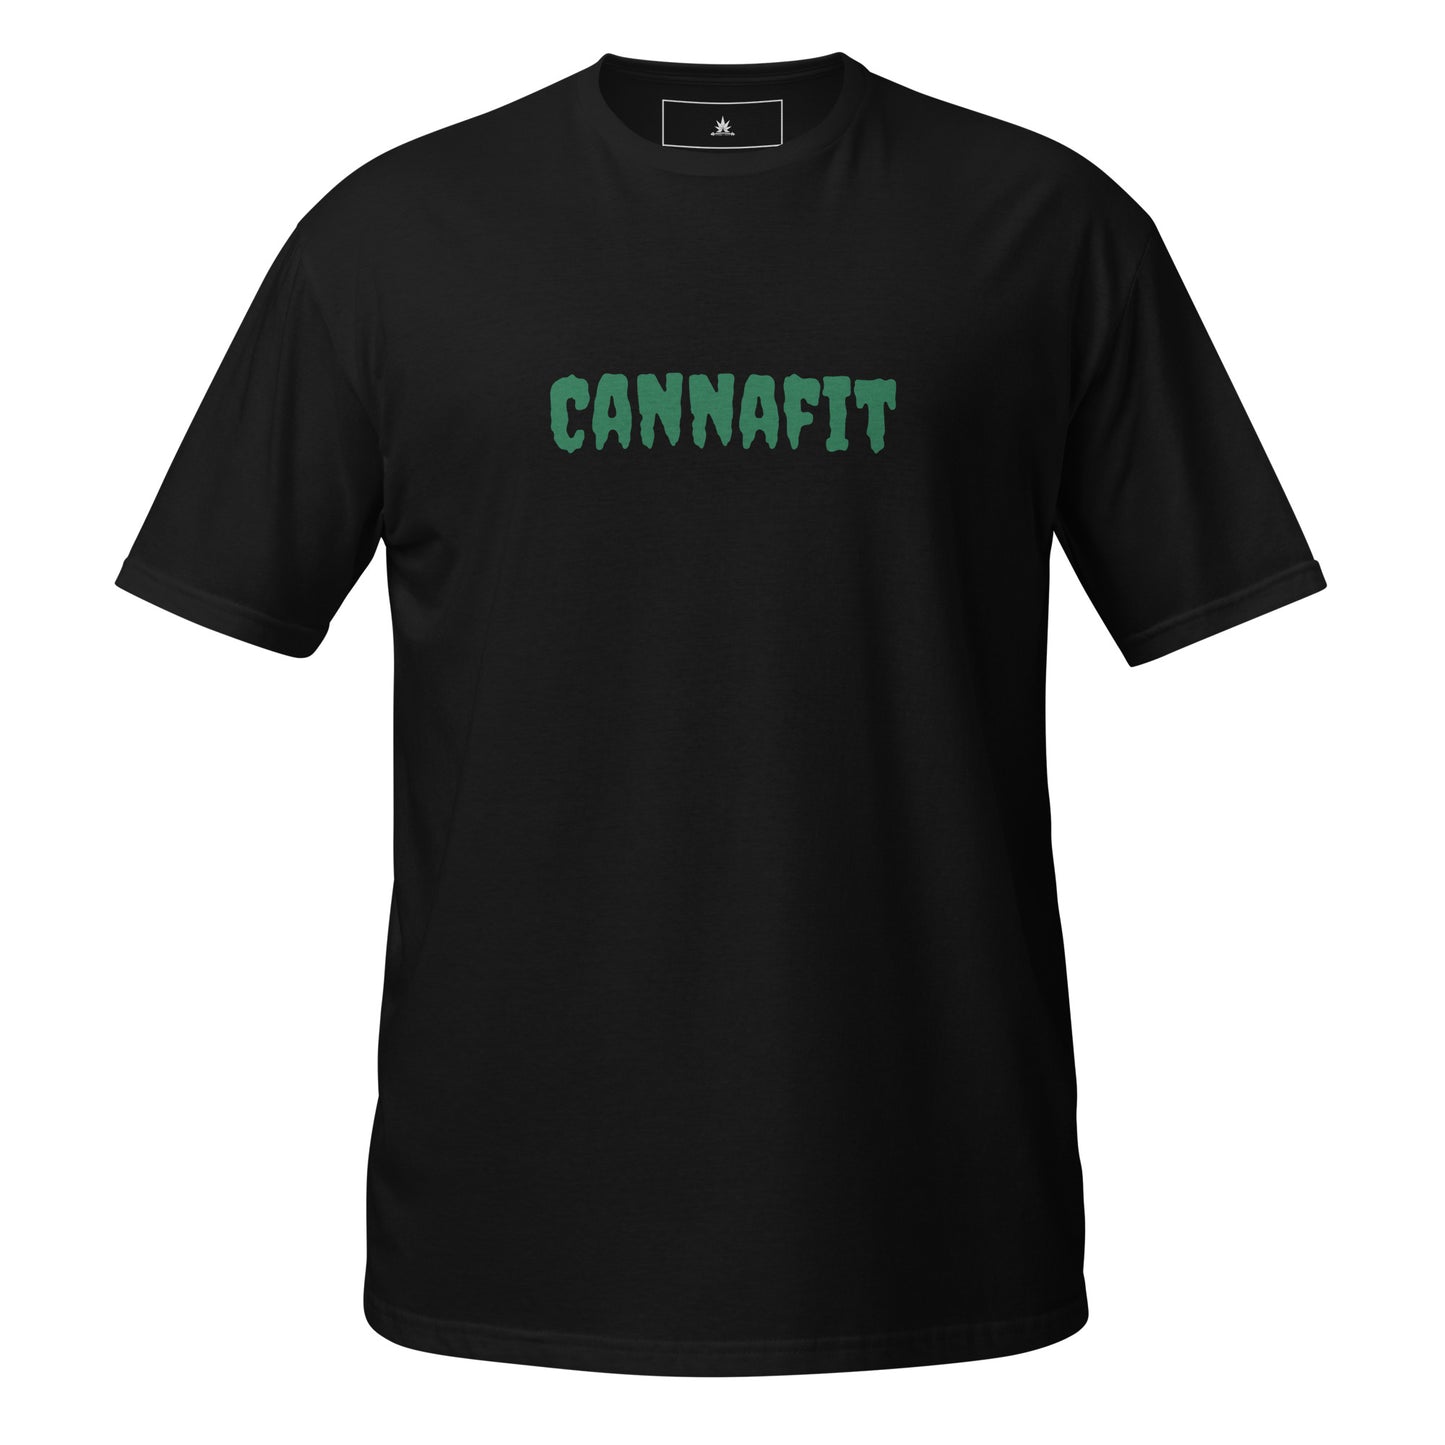 Cannafit Movement Unisex T-Shirt